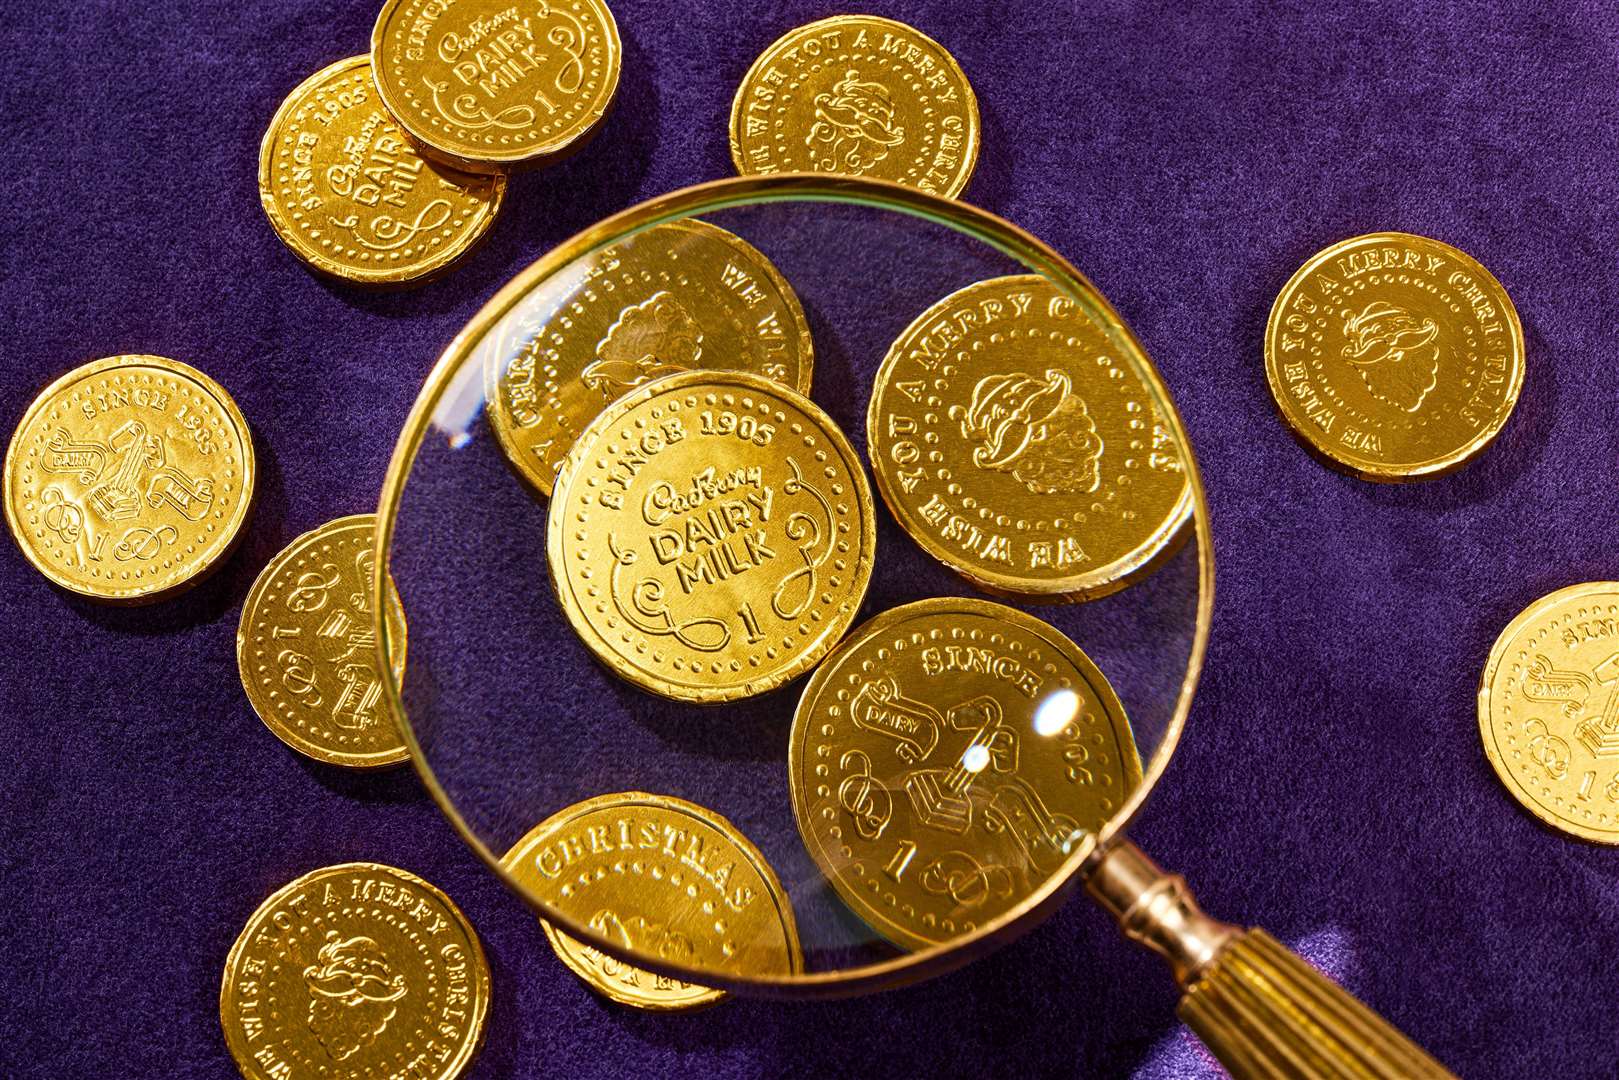 Cadbury chocolate coins made a comeback last Christmas after almost a decade. Image: Cadbury.